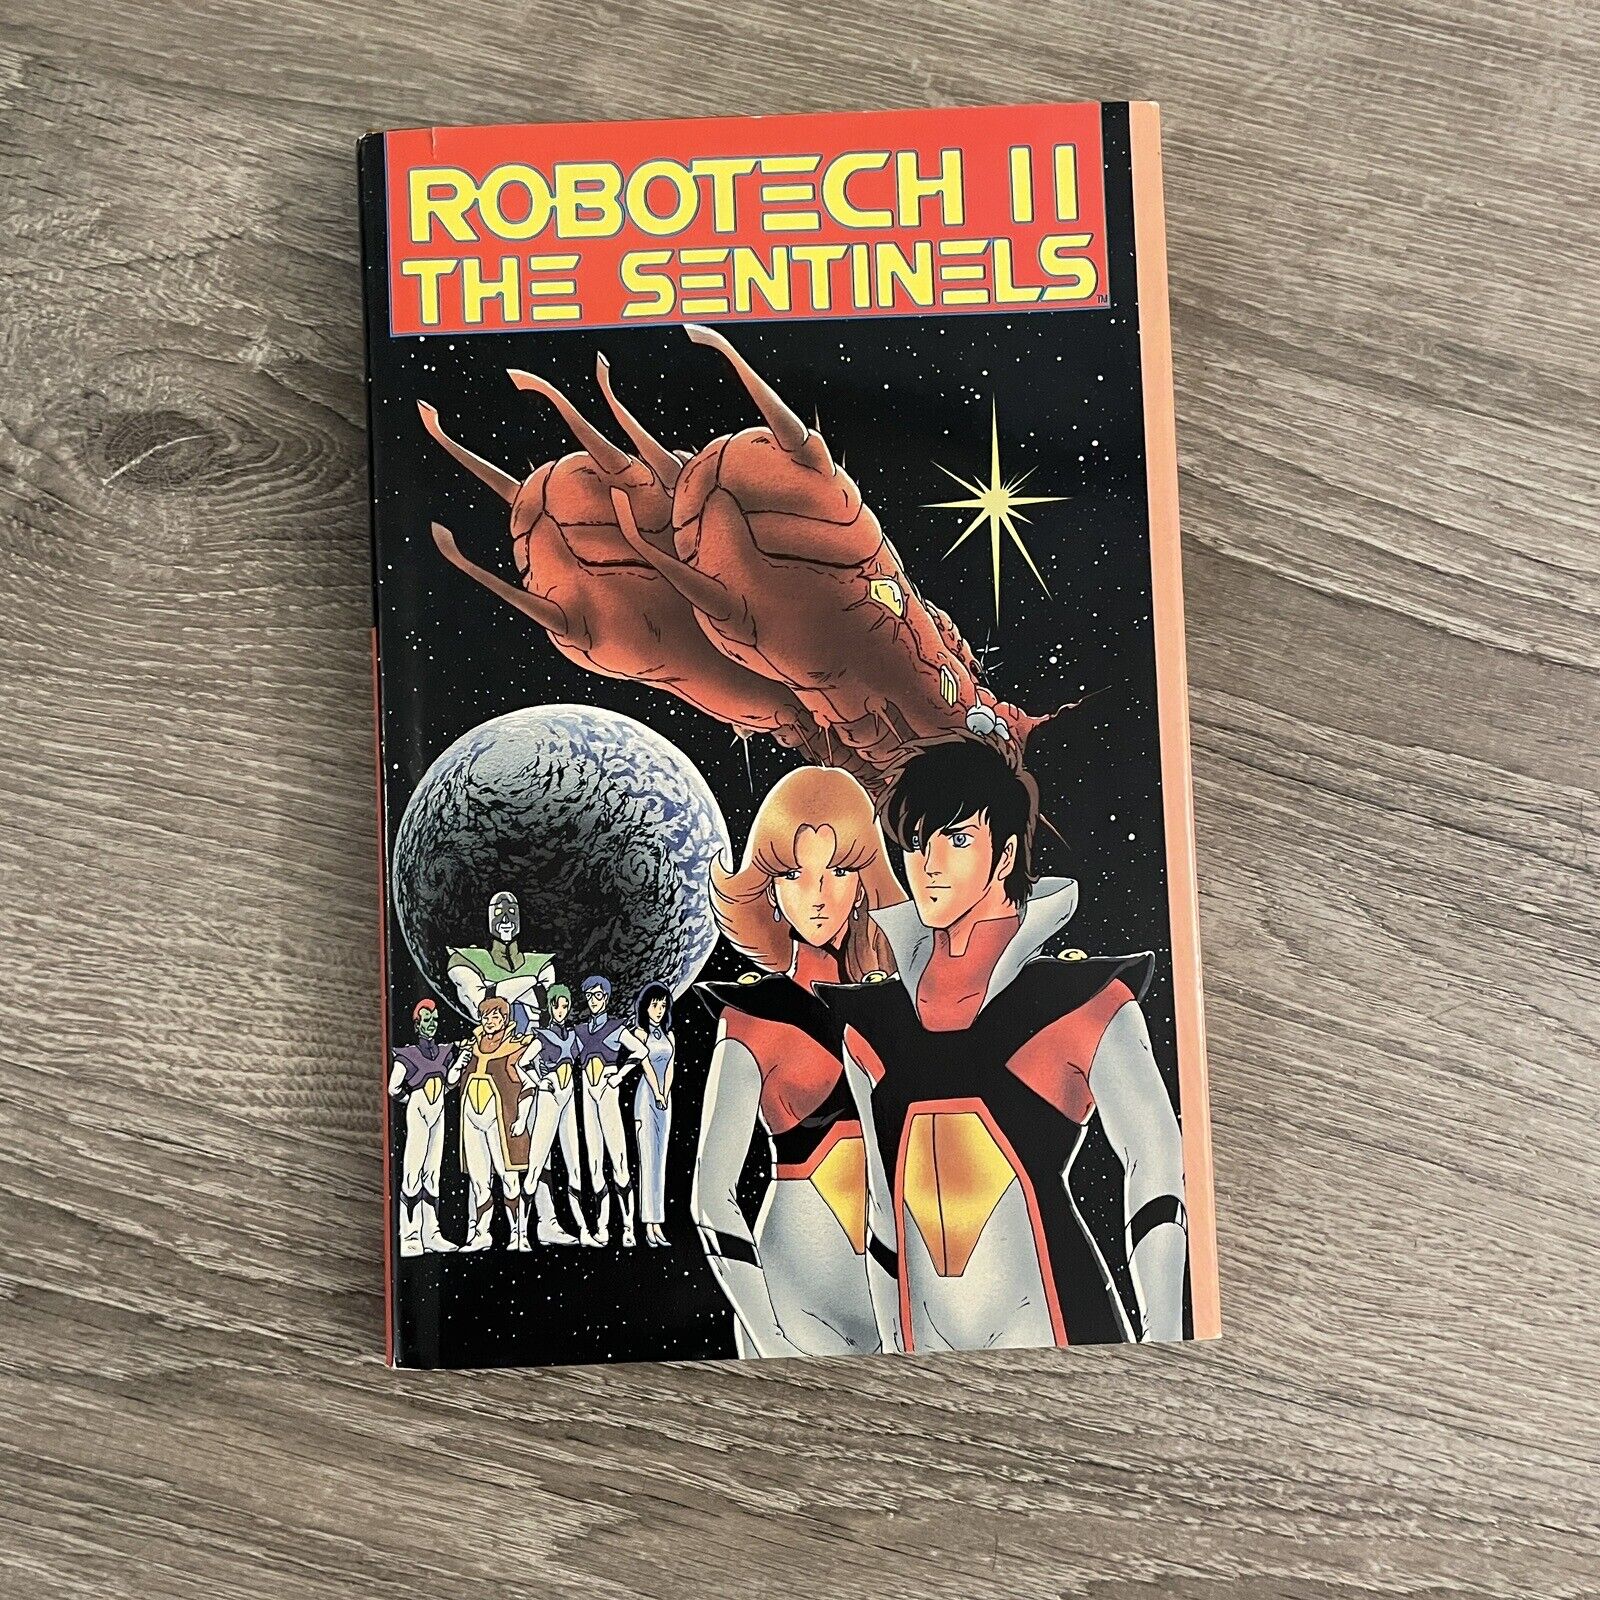 Robotech II: The Sentinels: A New Beginning, hardcover, Malibu Graphics 1989